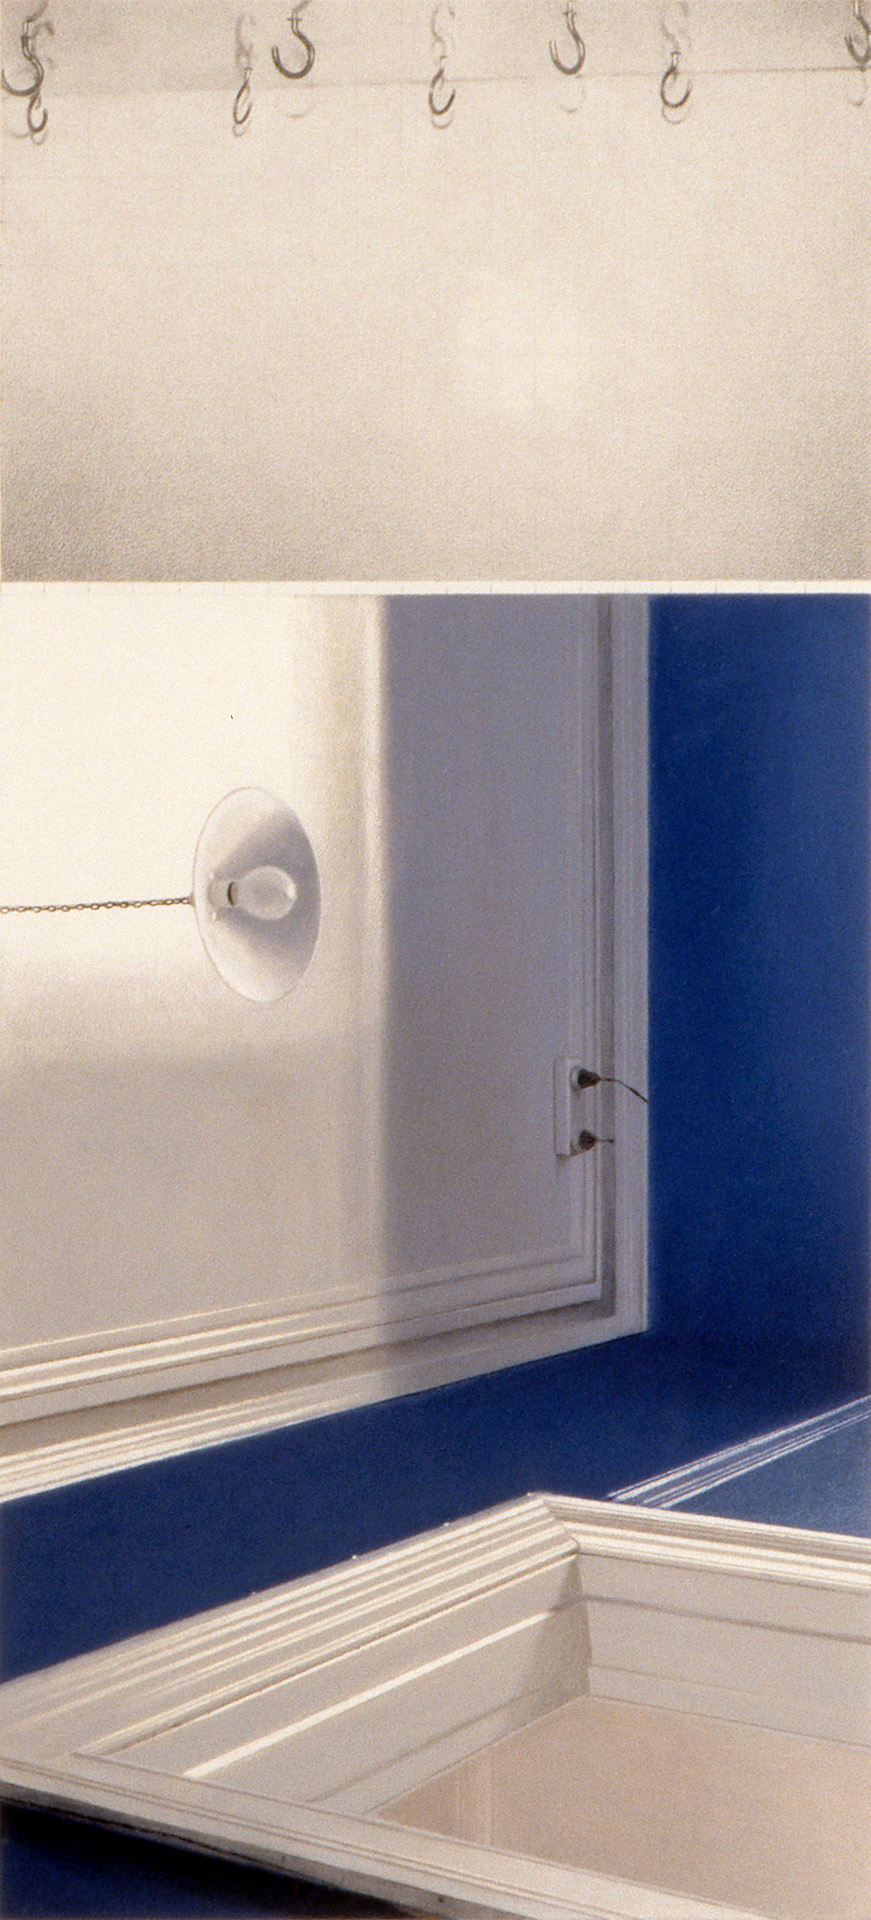  Nimbus, 2002, burnished aquatint, pastel, carbon & graphite, 200 x 435mm, private collection 